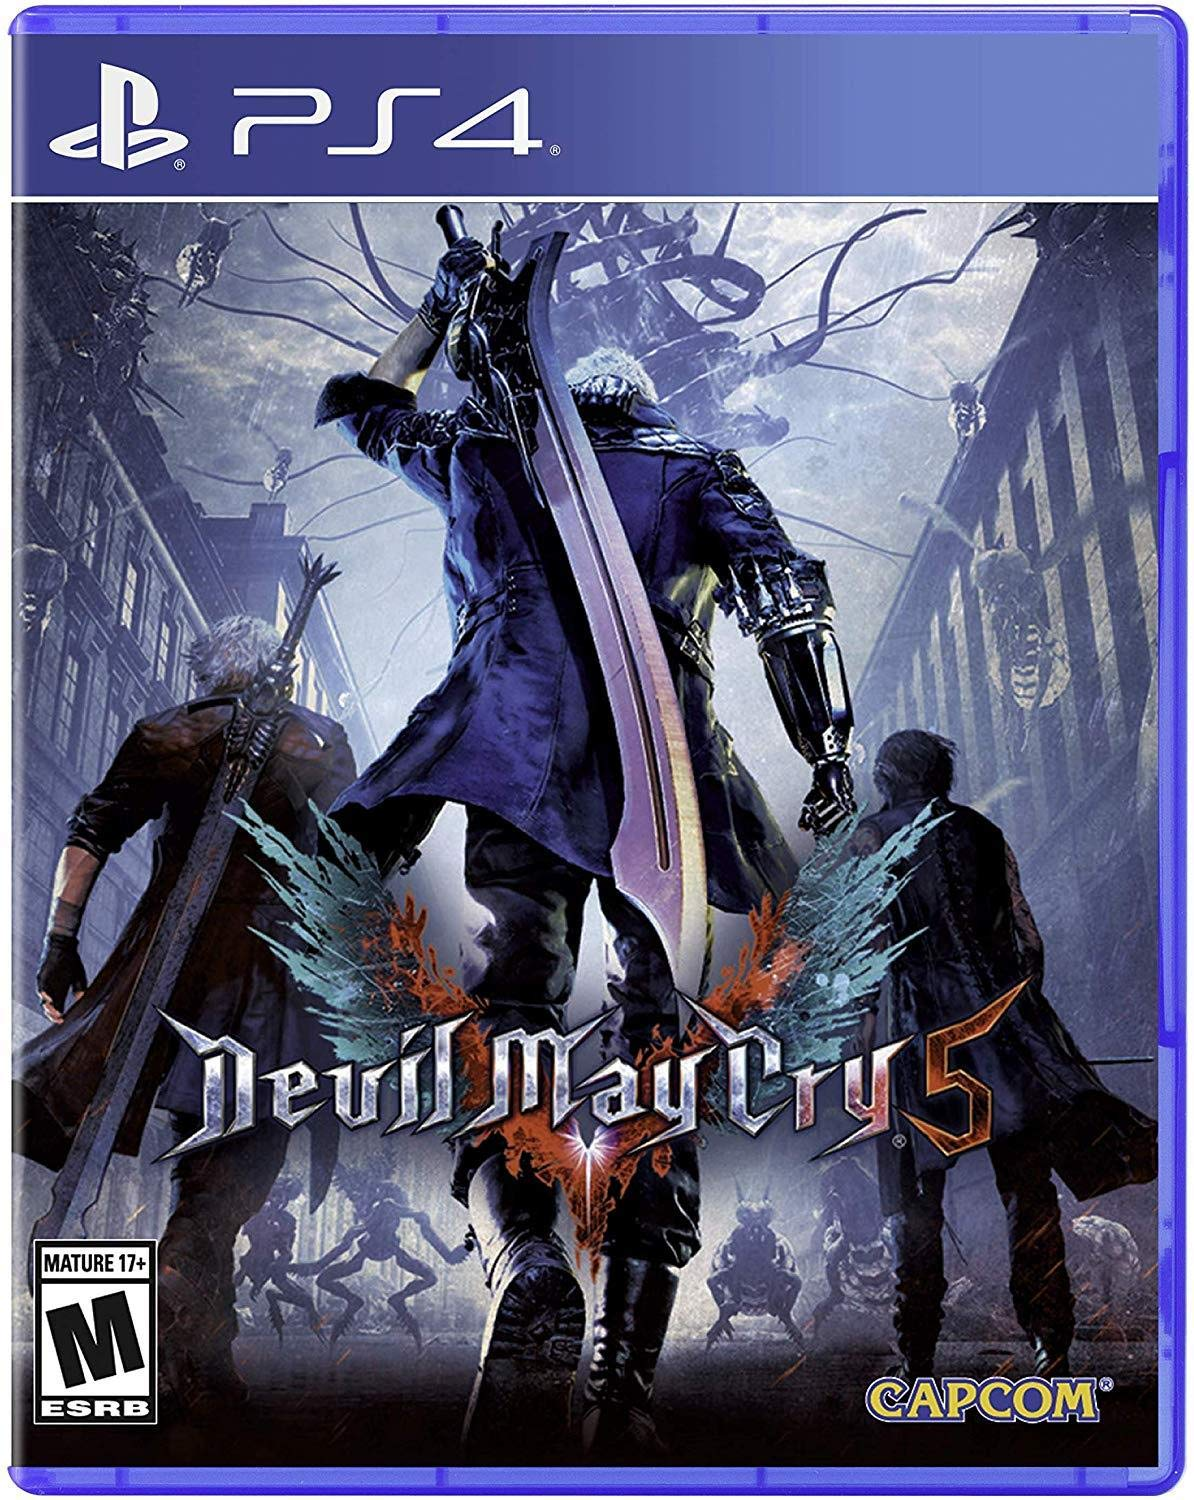 Devil May Cry 5 - PlayStation 4 $14.99